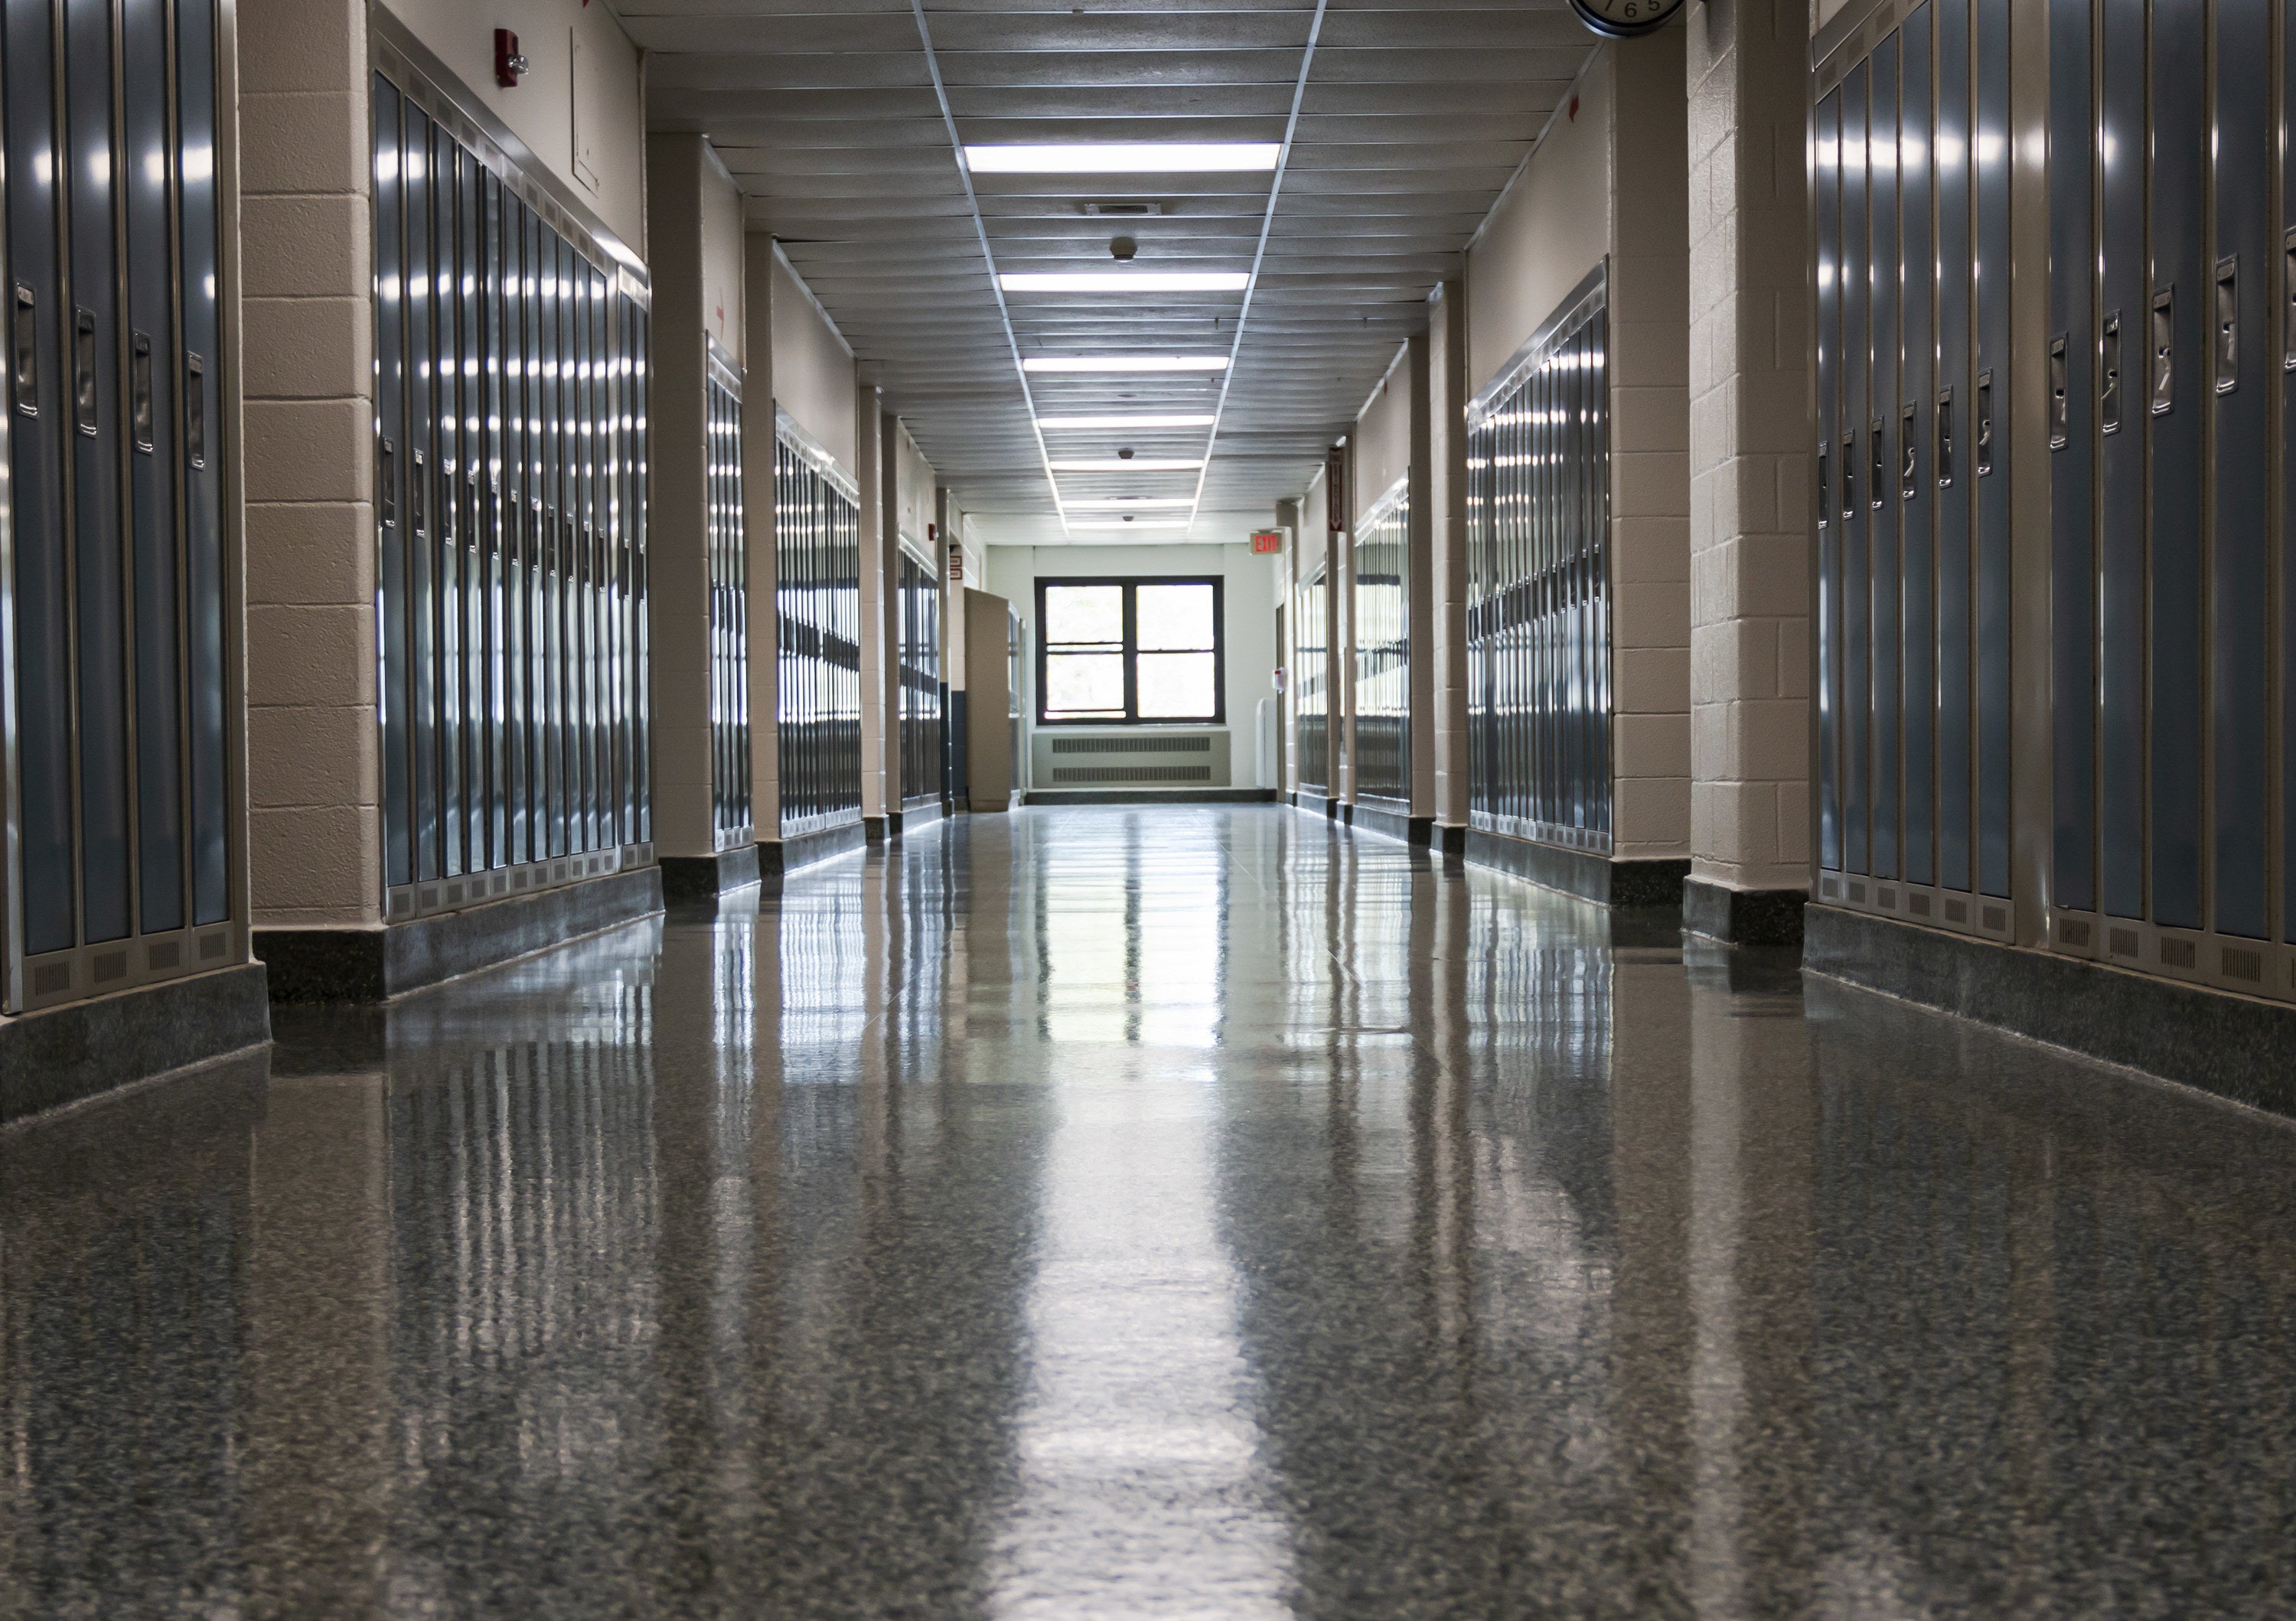 A hallway of lockers in a school